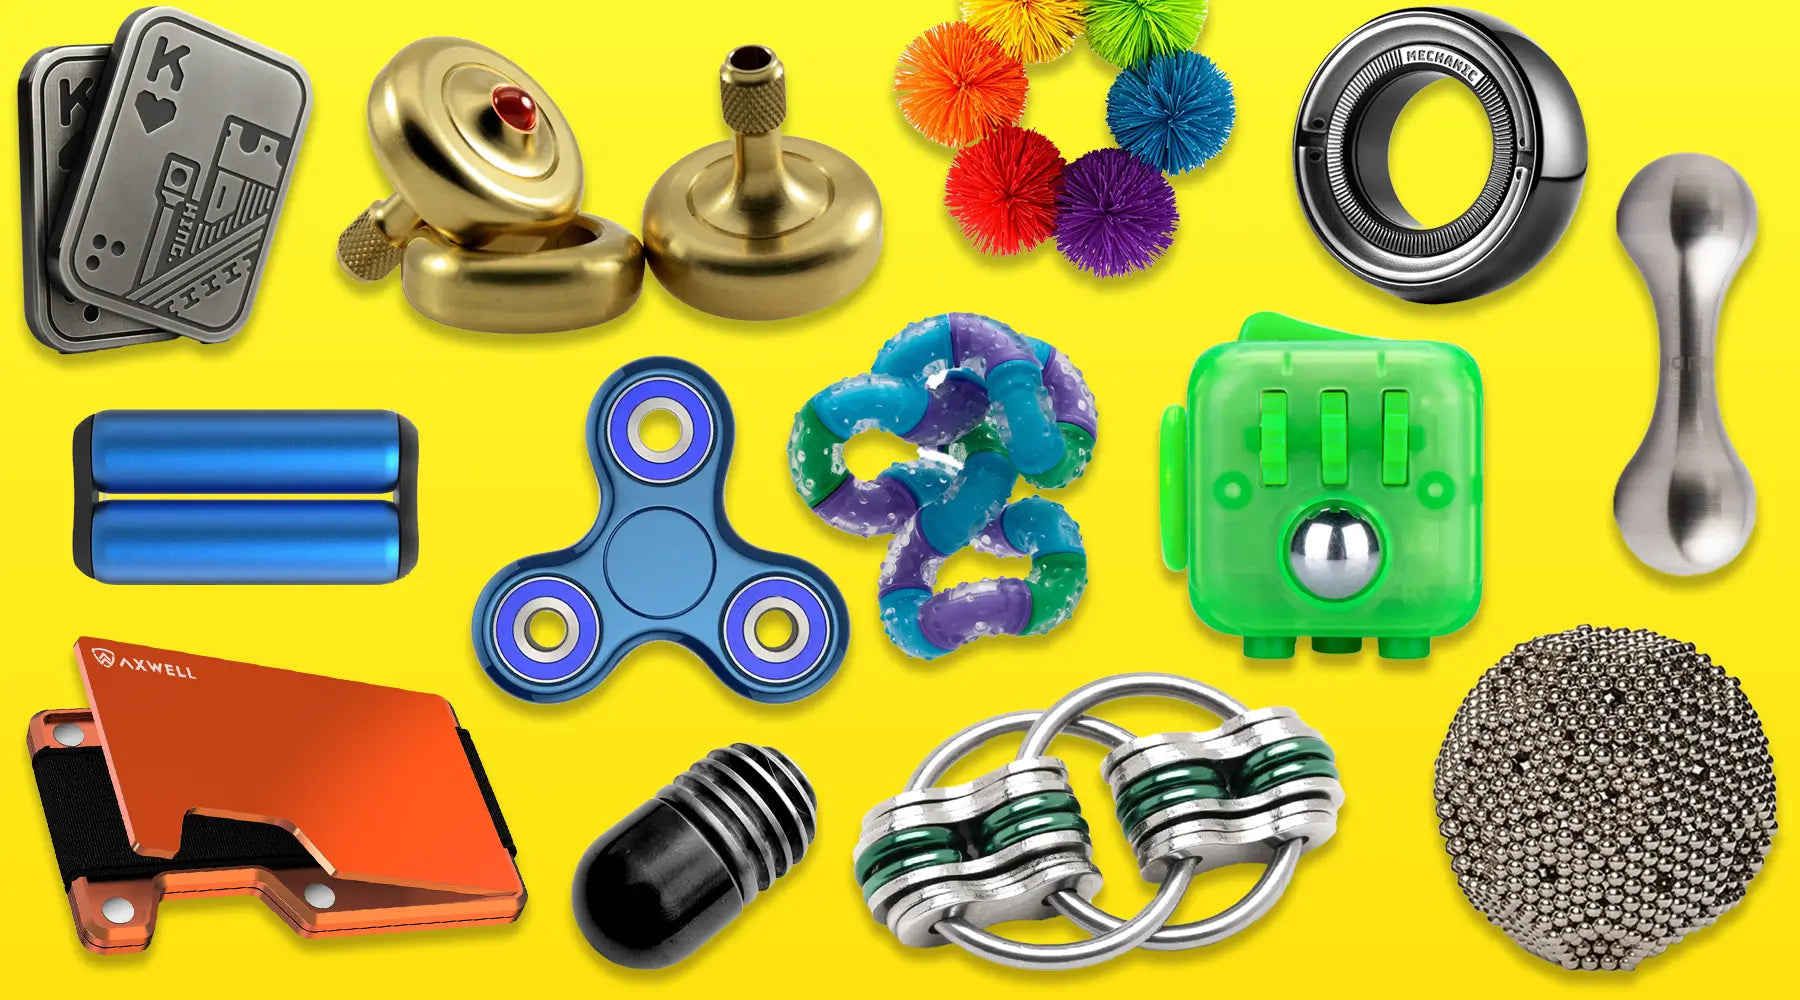 Fidget Spinner Set of 6 - Autism Spinning Fidgets - Bulk Fidget Spinners